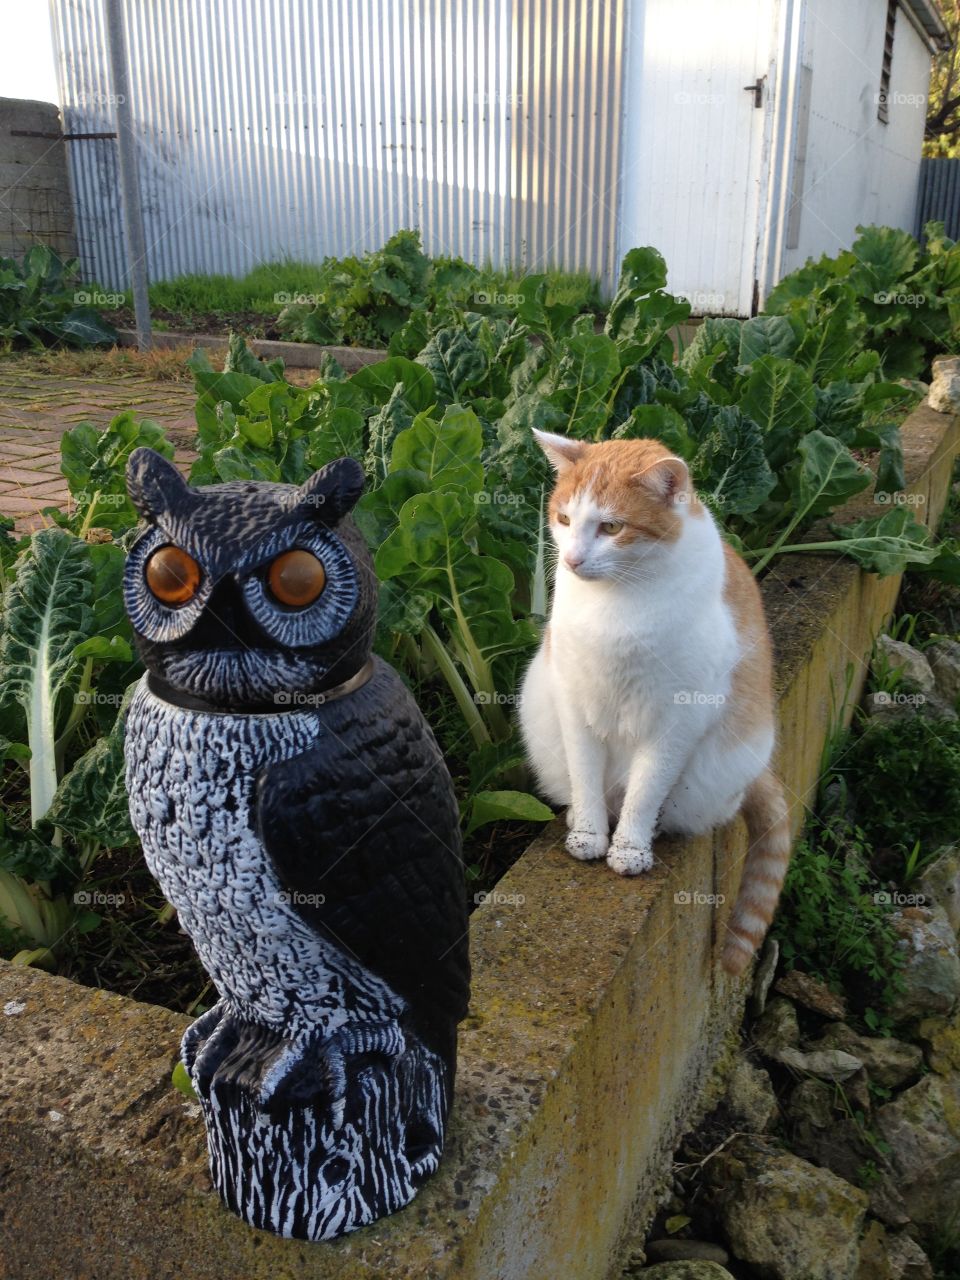 Keeping an eye on the veggie garden!